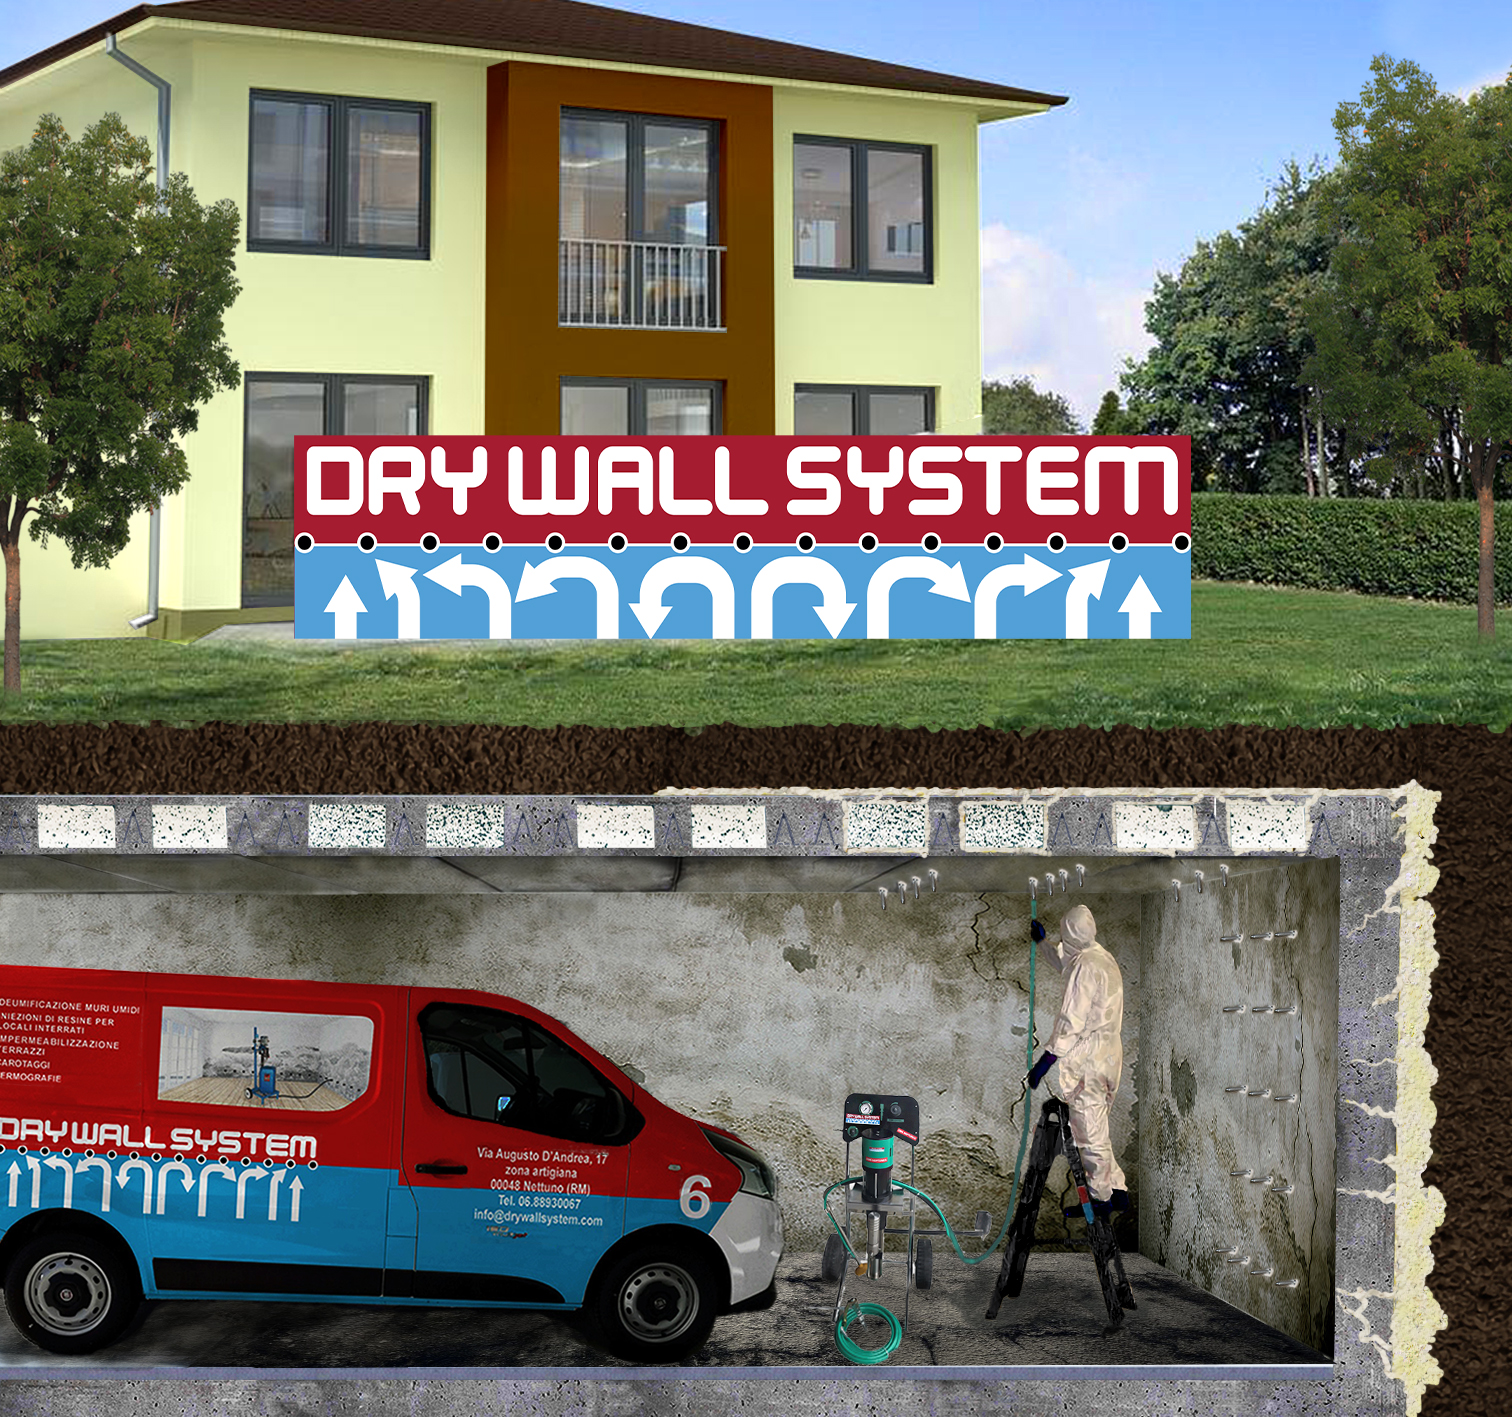 grafica drywallsystem3